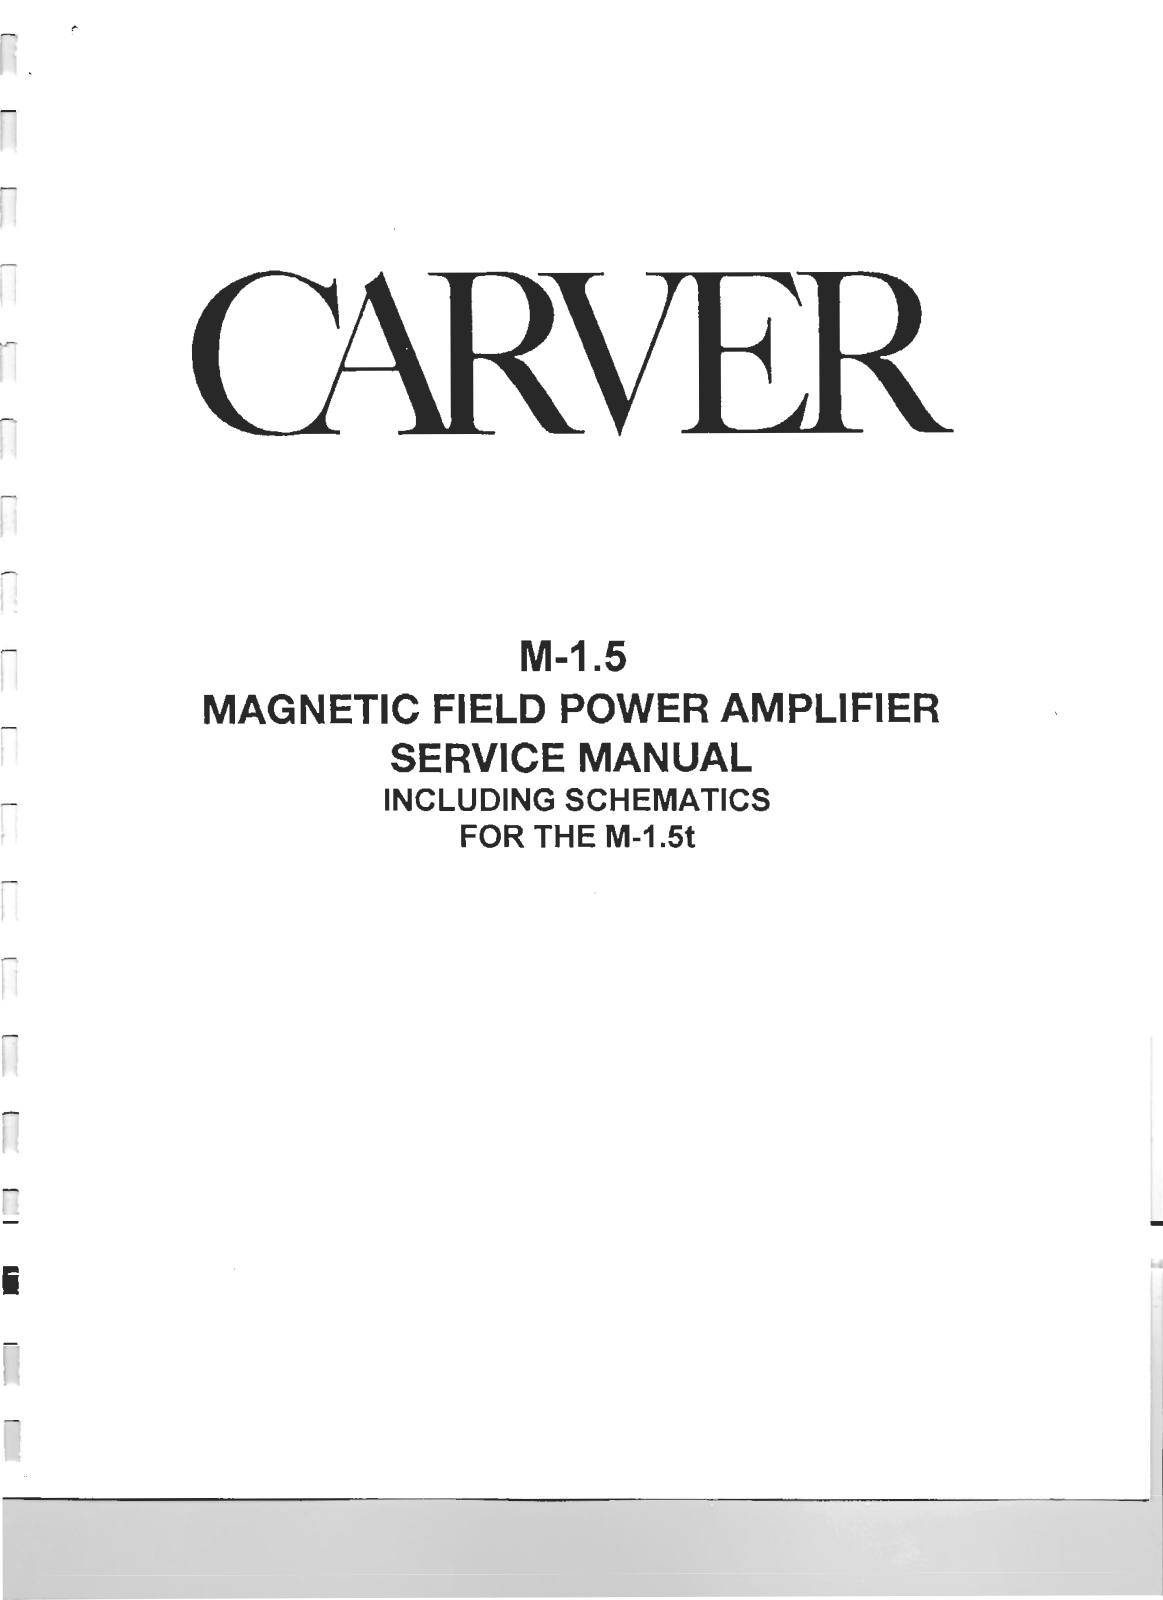 Carver M-1.5 Service manual